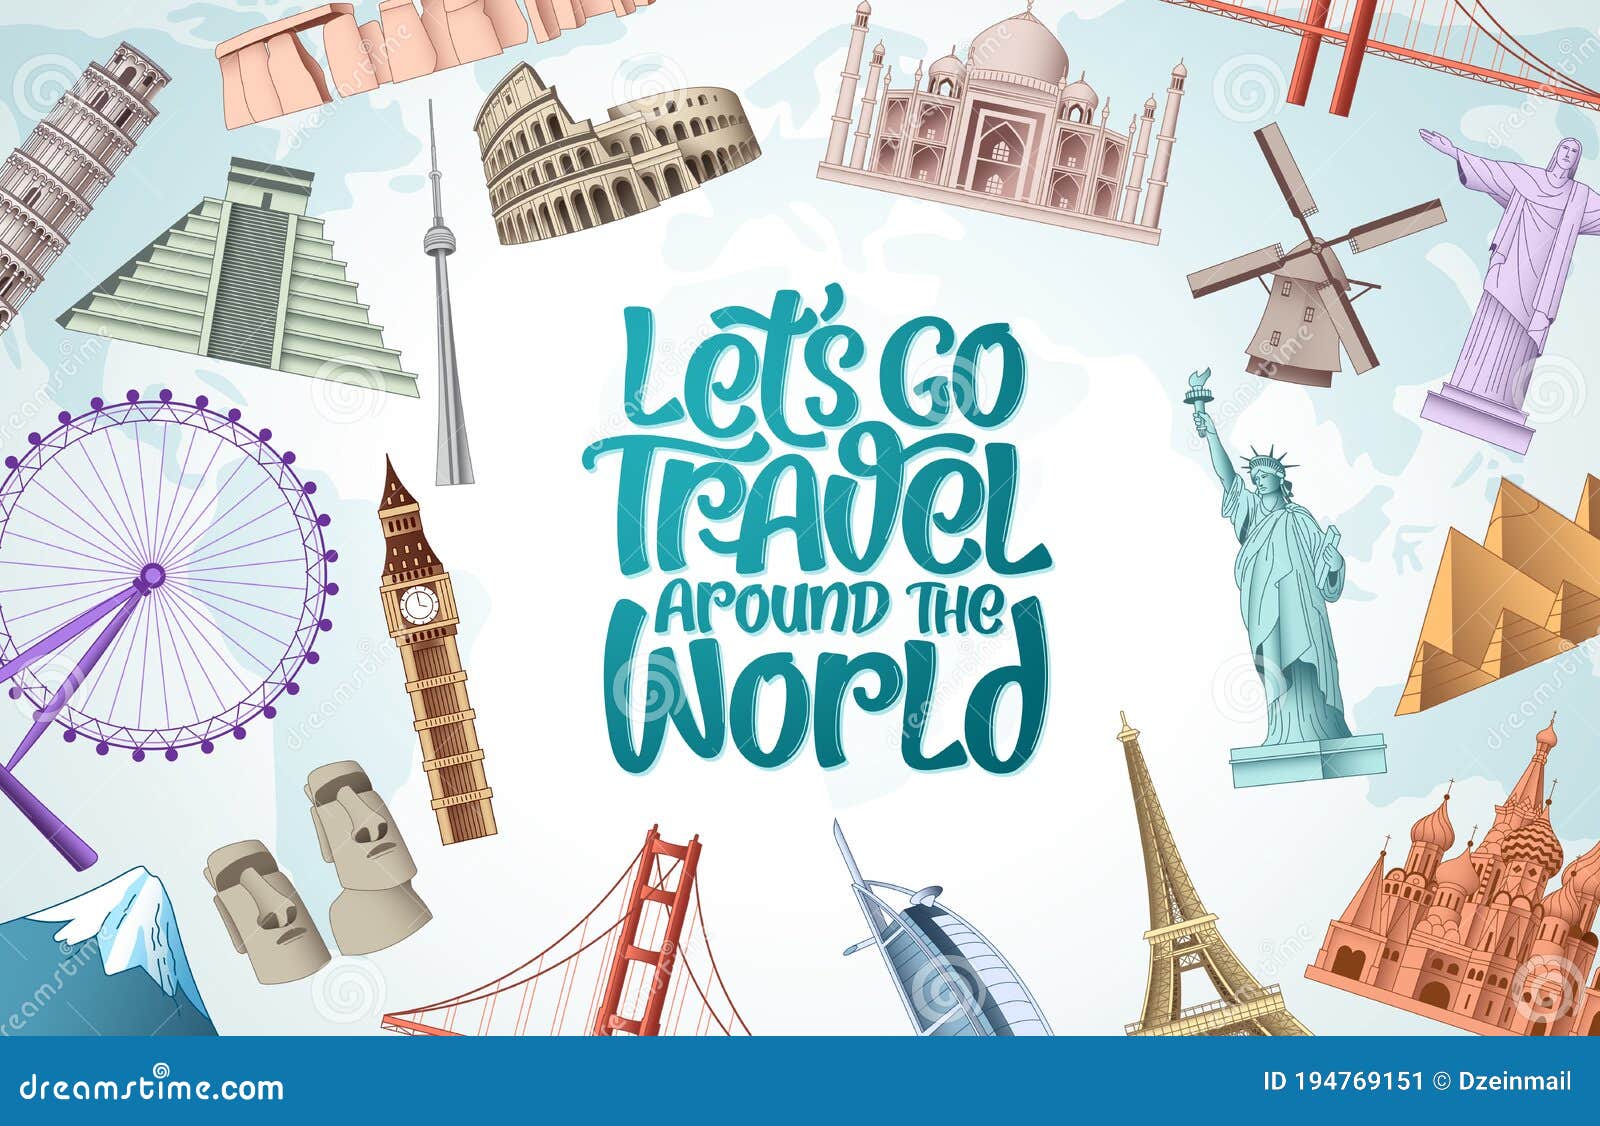 Let`s Go Travel Vector Design. Let`s Go Travel Around the World ...